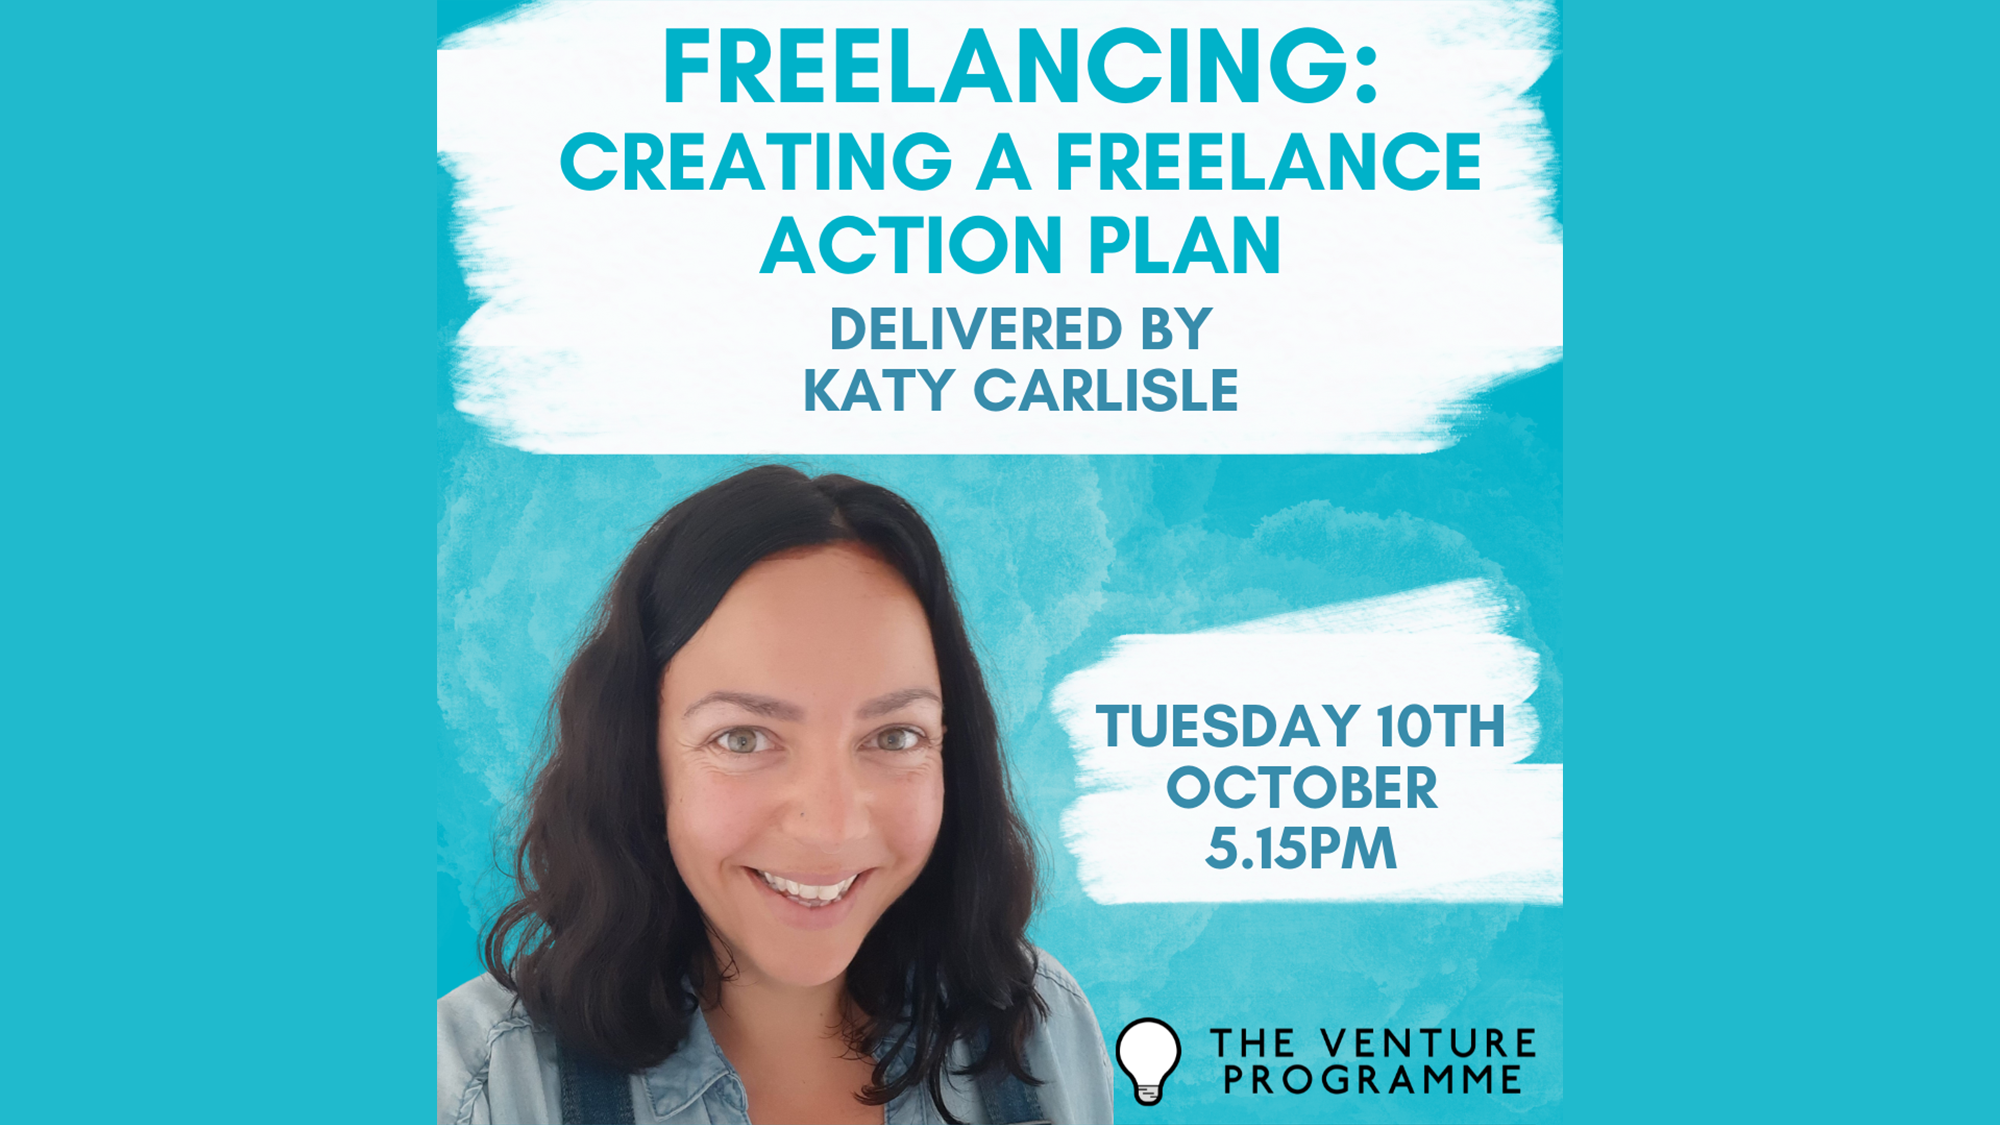 Venture Programme: Creating a Freelance Action Plan